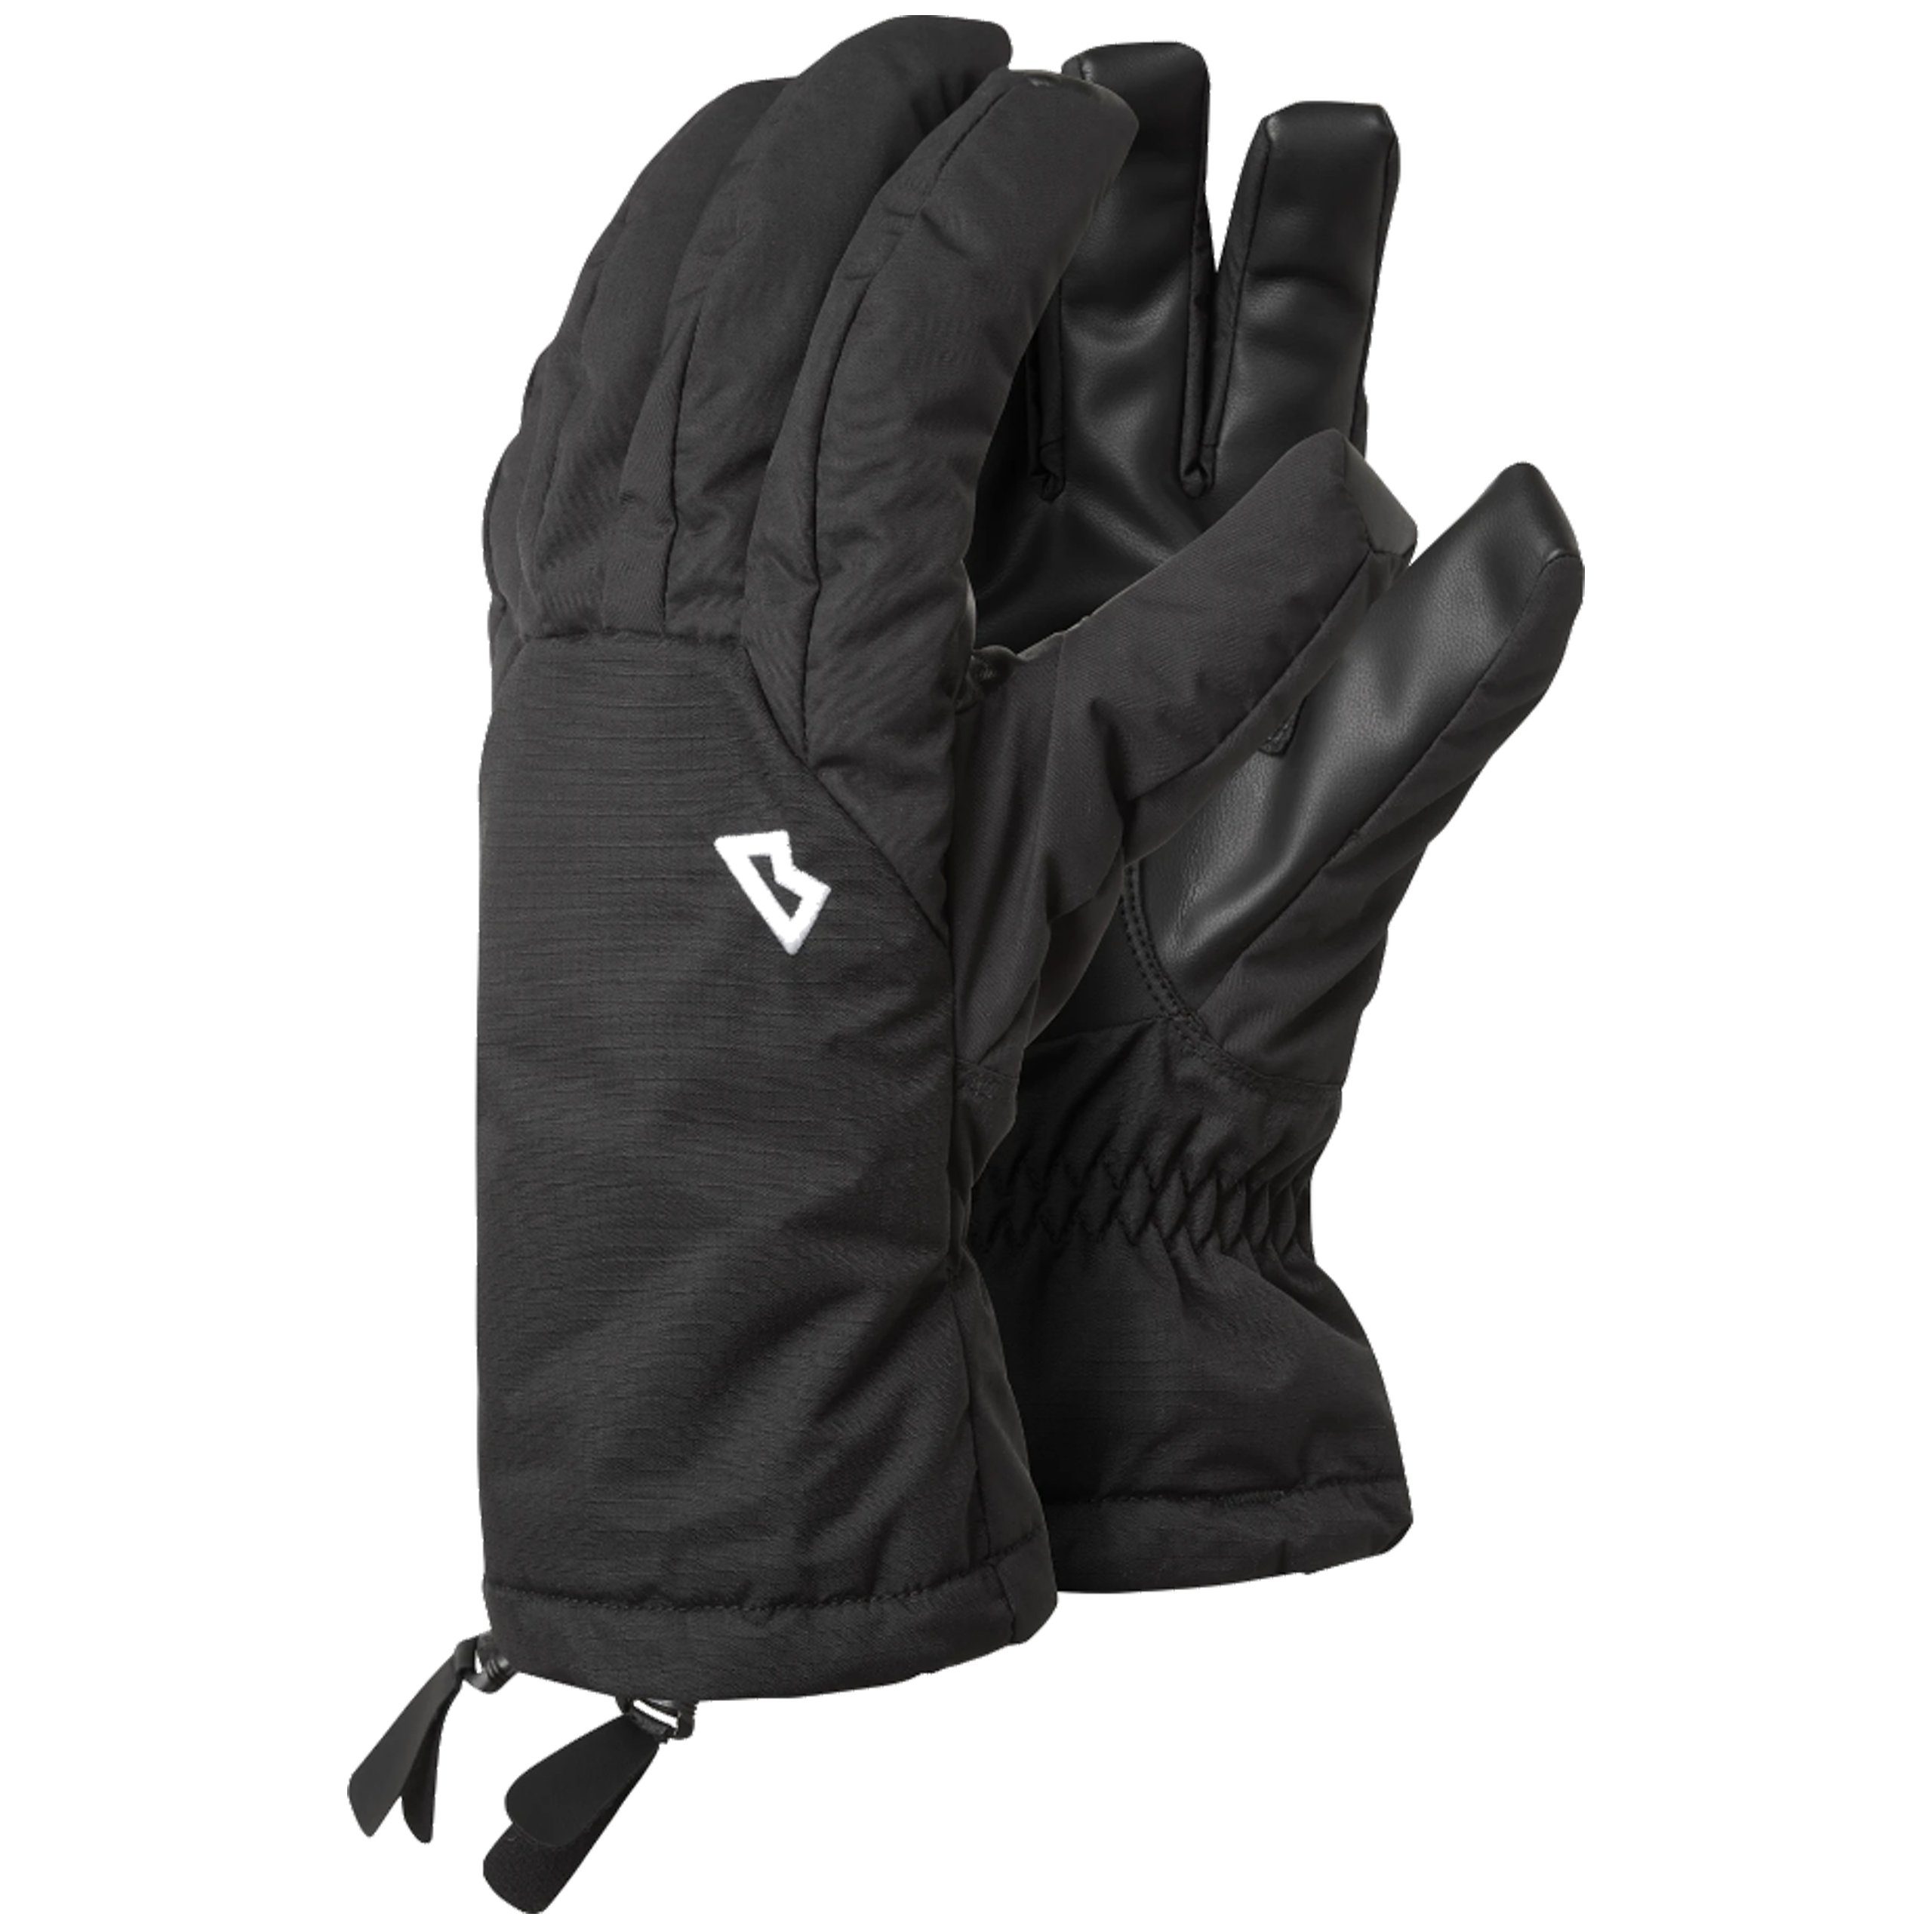 Winter-Bergsporthands - Mountain wasserdichte Mountain Equipment Mountain Multisporthandschuhe Glove Equipment